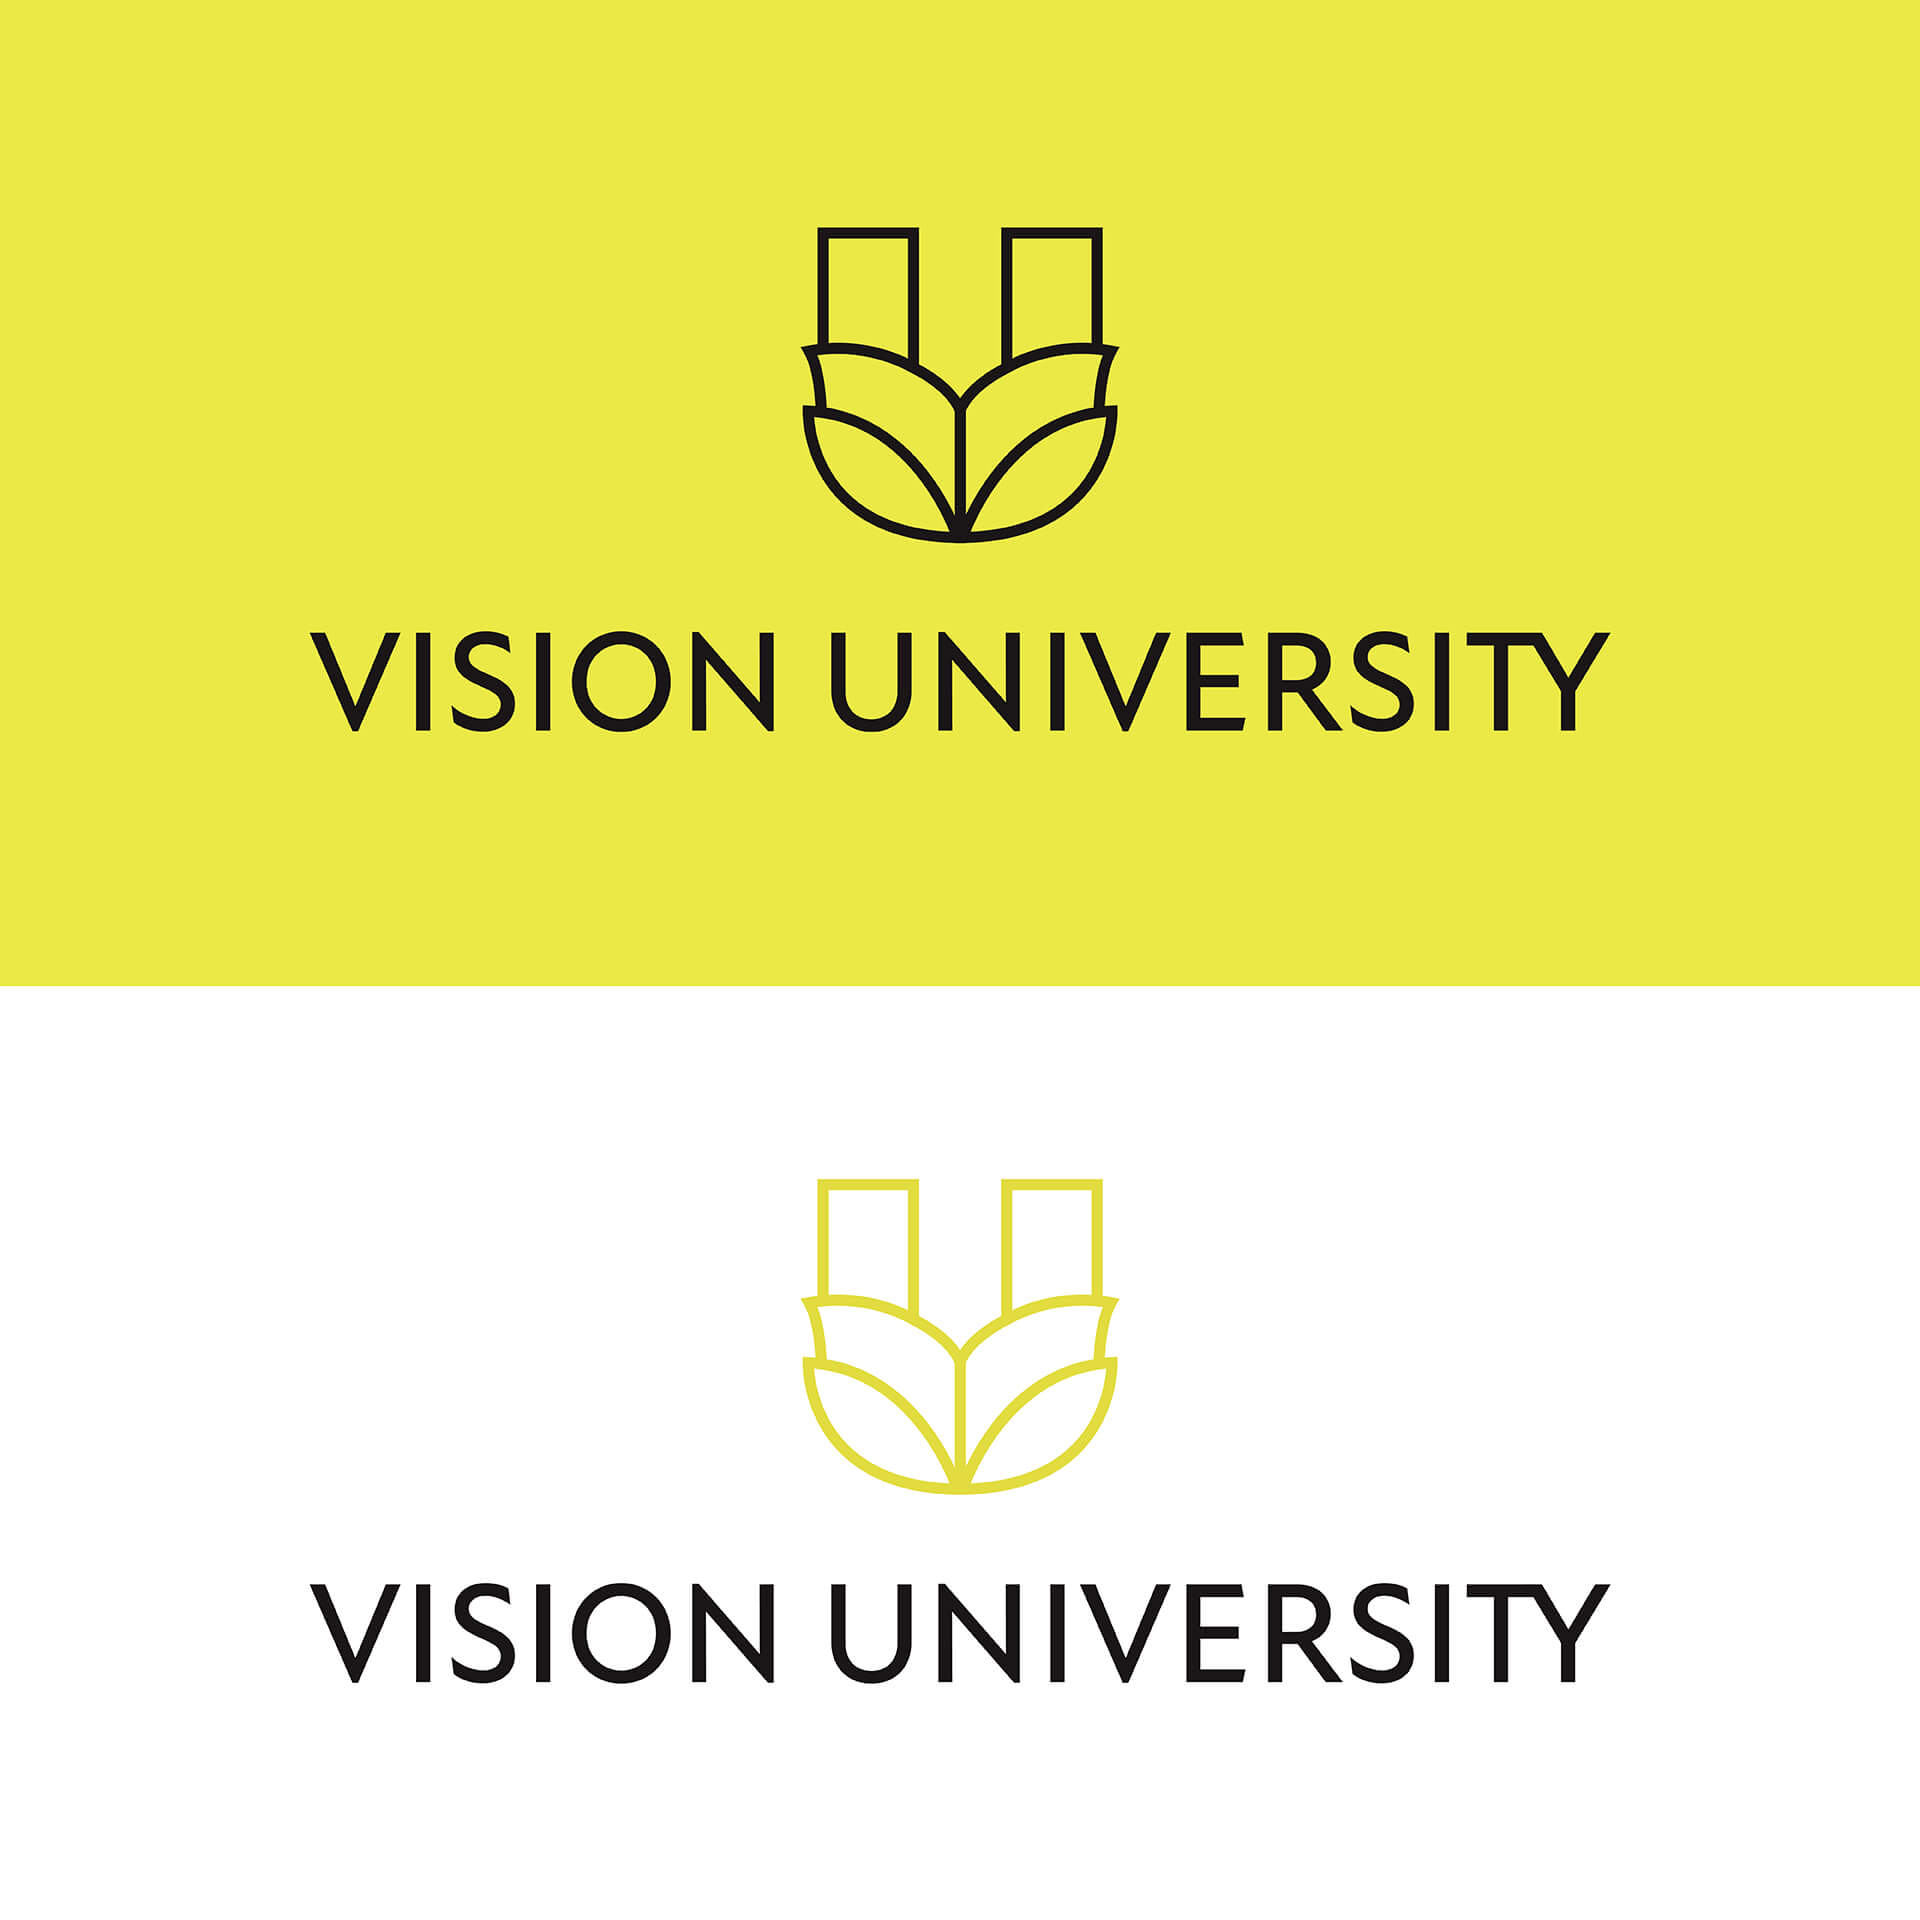 Vision University Brand Standards